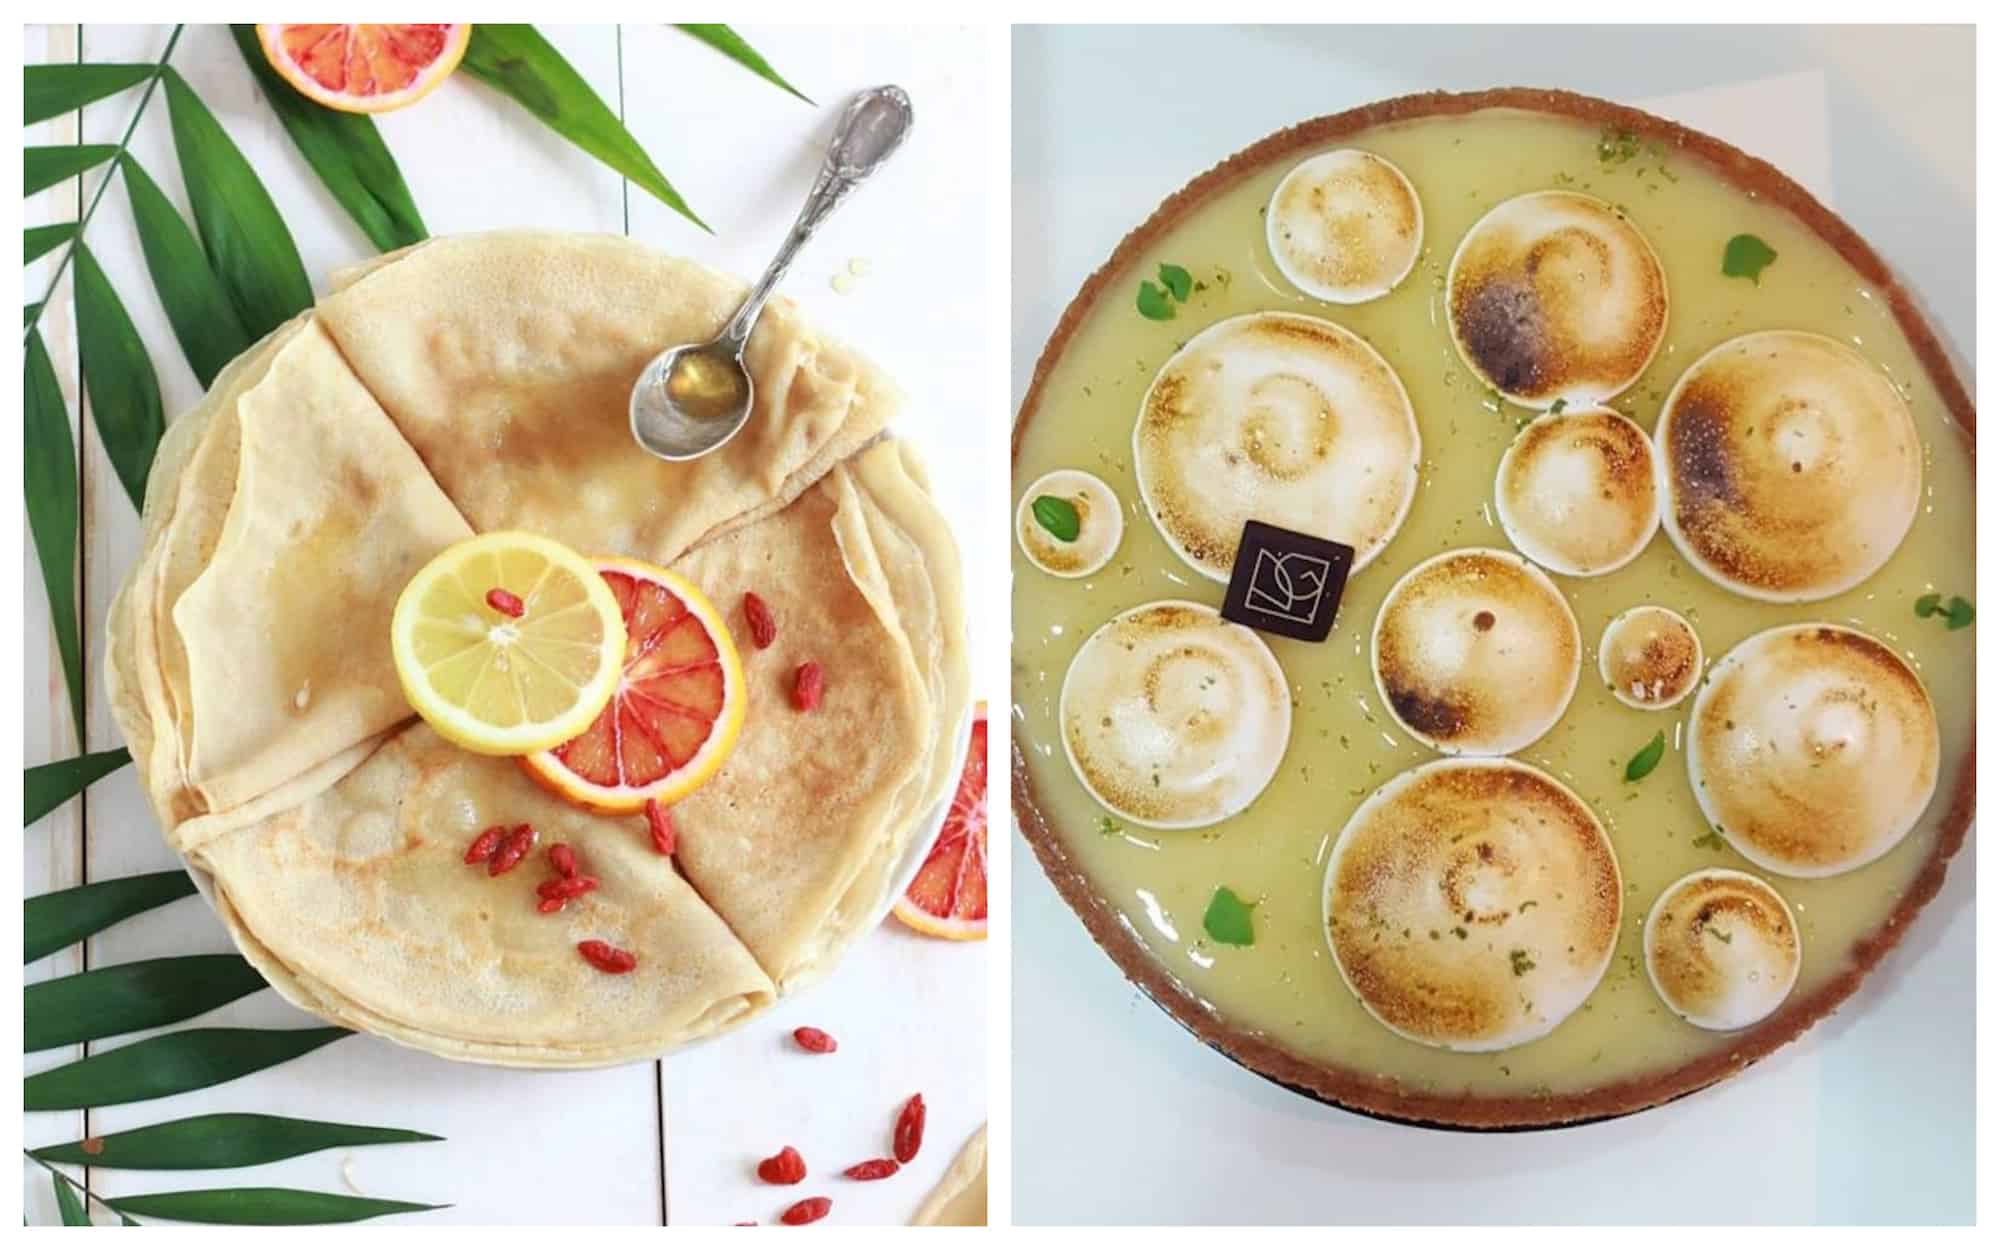 Top vegan bakery eat in Paris, VG patisserie offers delicate lemon and goji berry pancakes (left) and lemon meringue tarts (right).